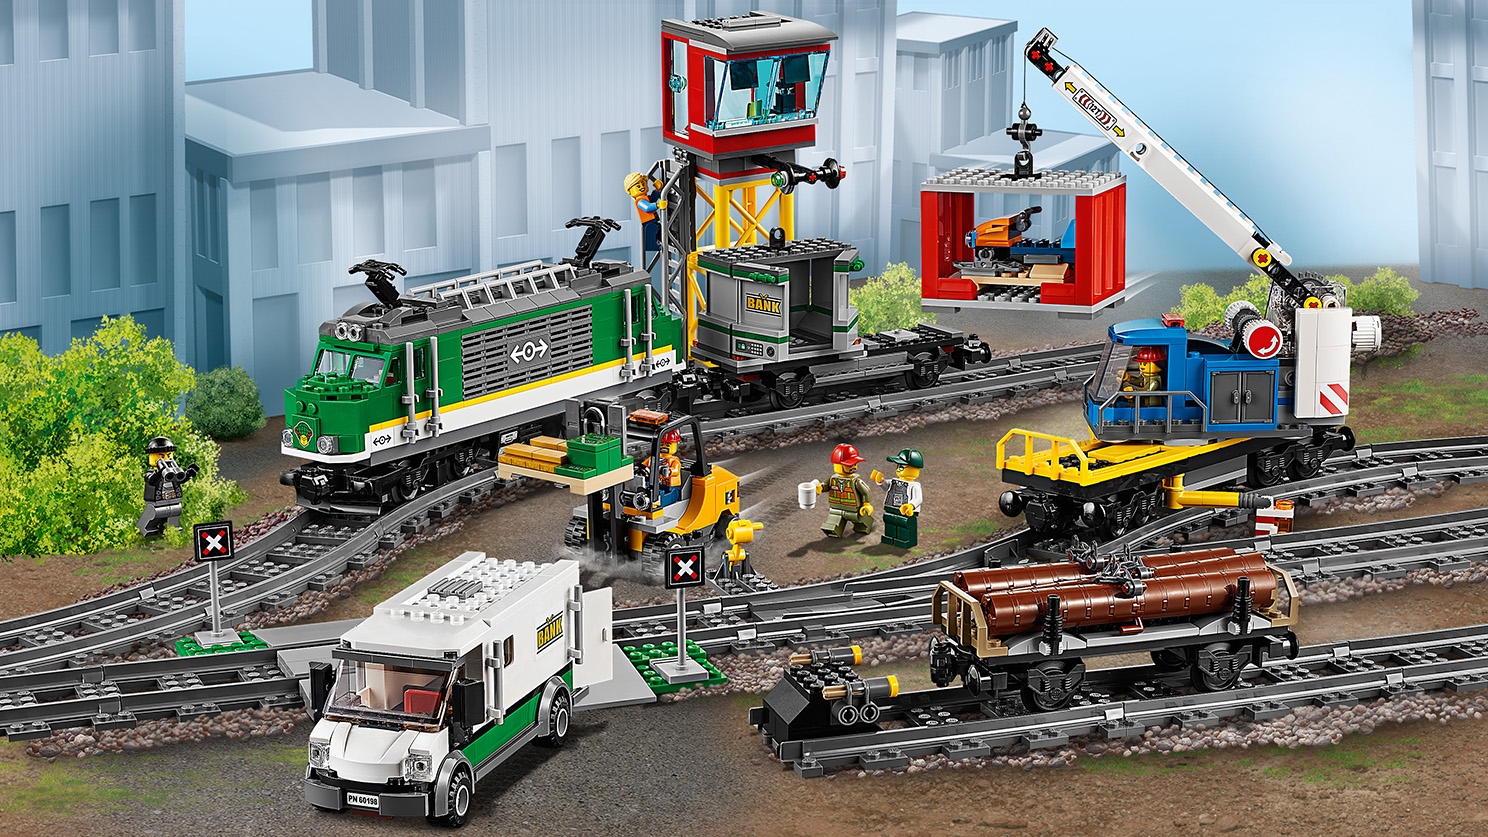 Lego City Train Set Factory Sale, SAVE - mpgc.net